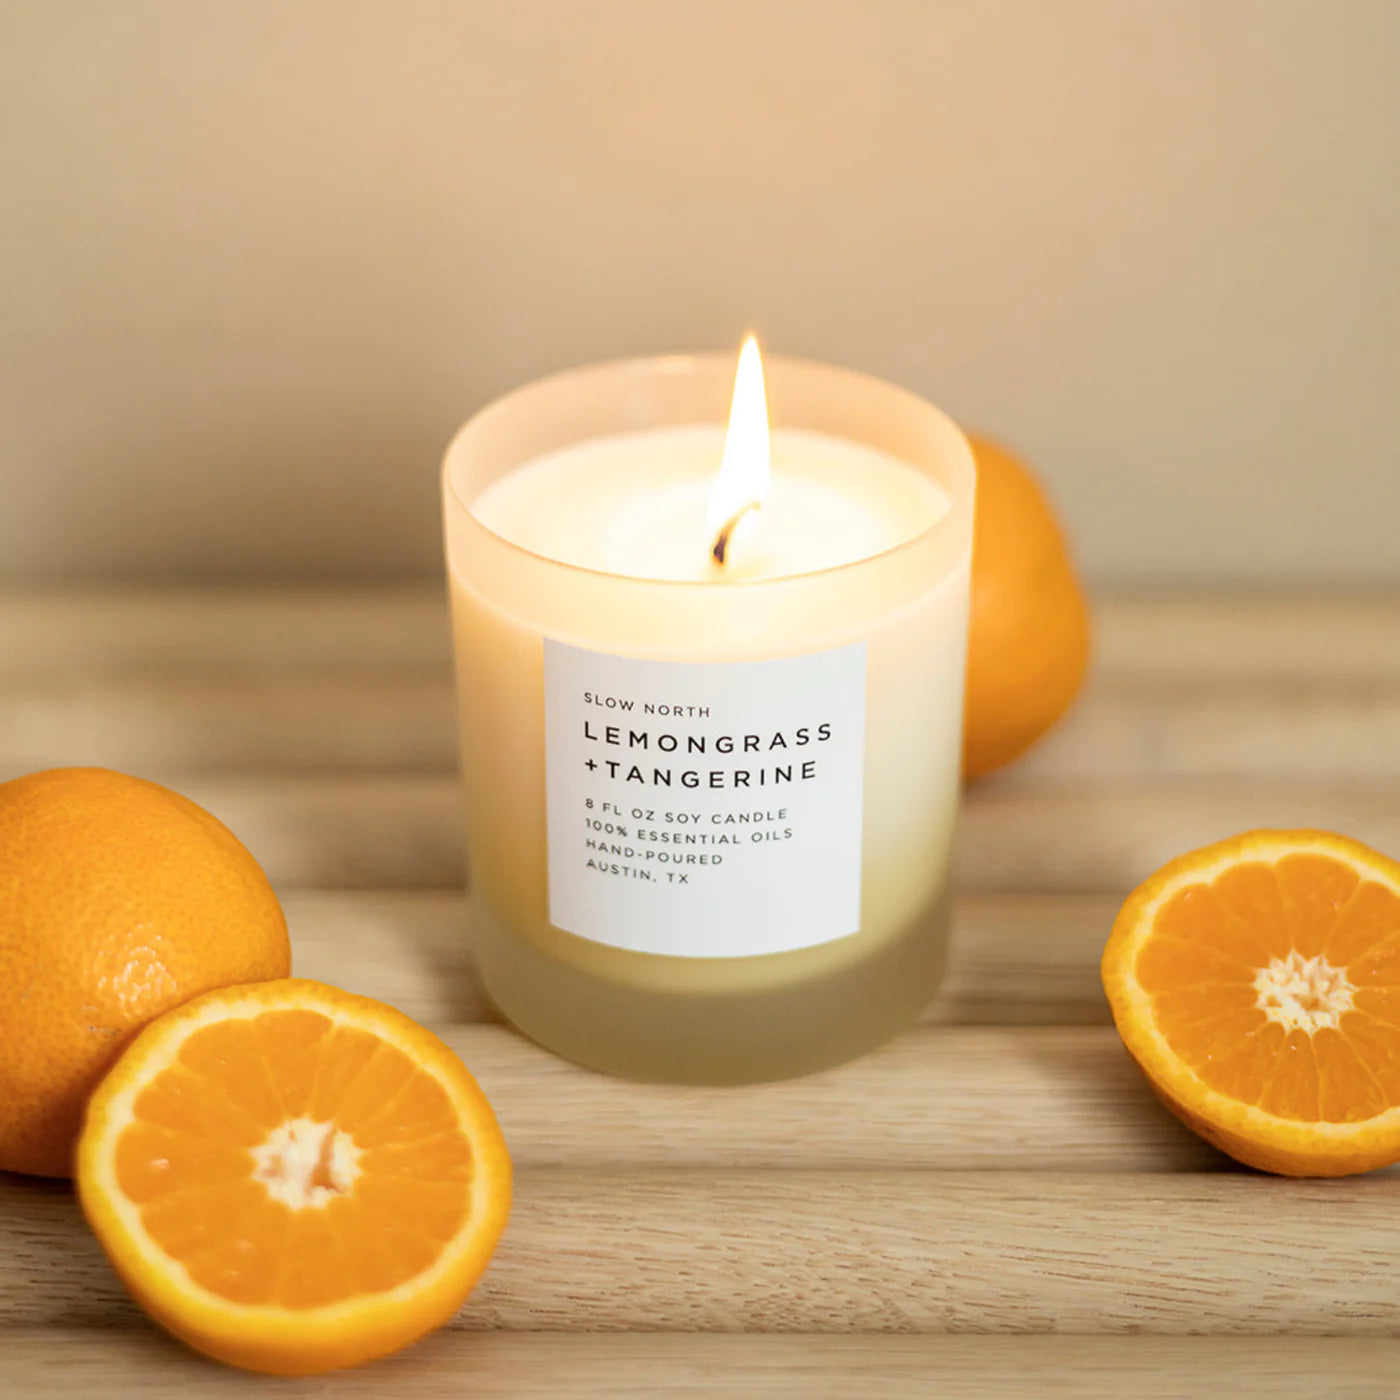 Lemongrass + Tangerine Candle